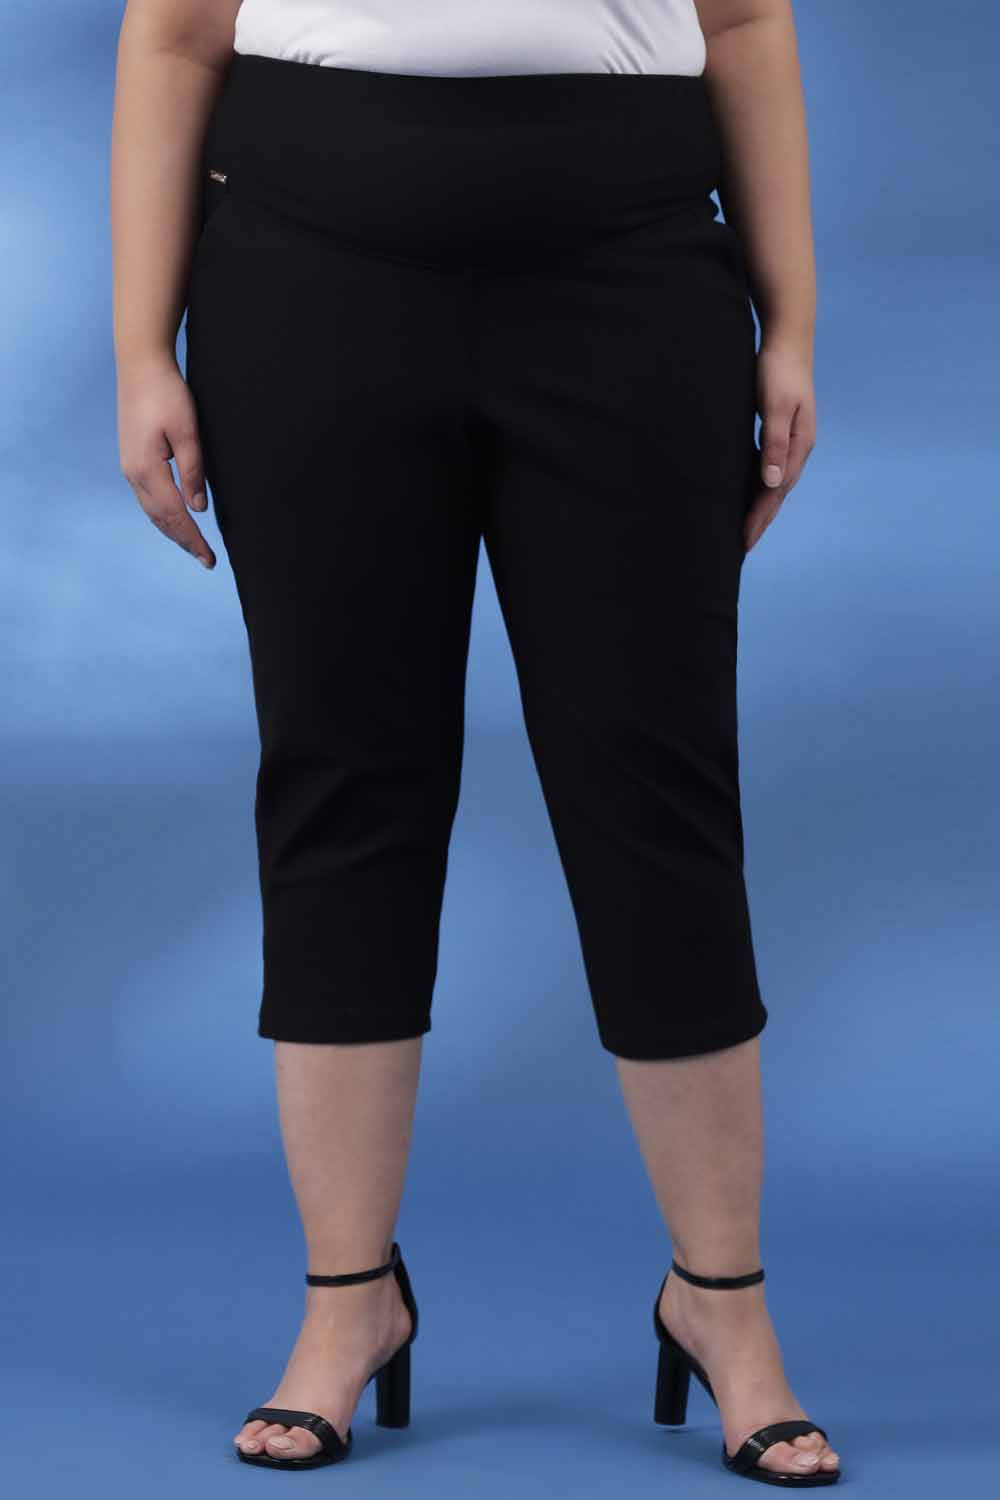 Plus Size Women's Pants - Bell Bottom Pants, Cargo Pants